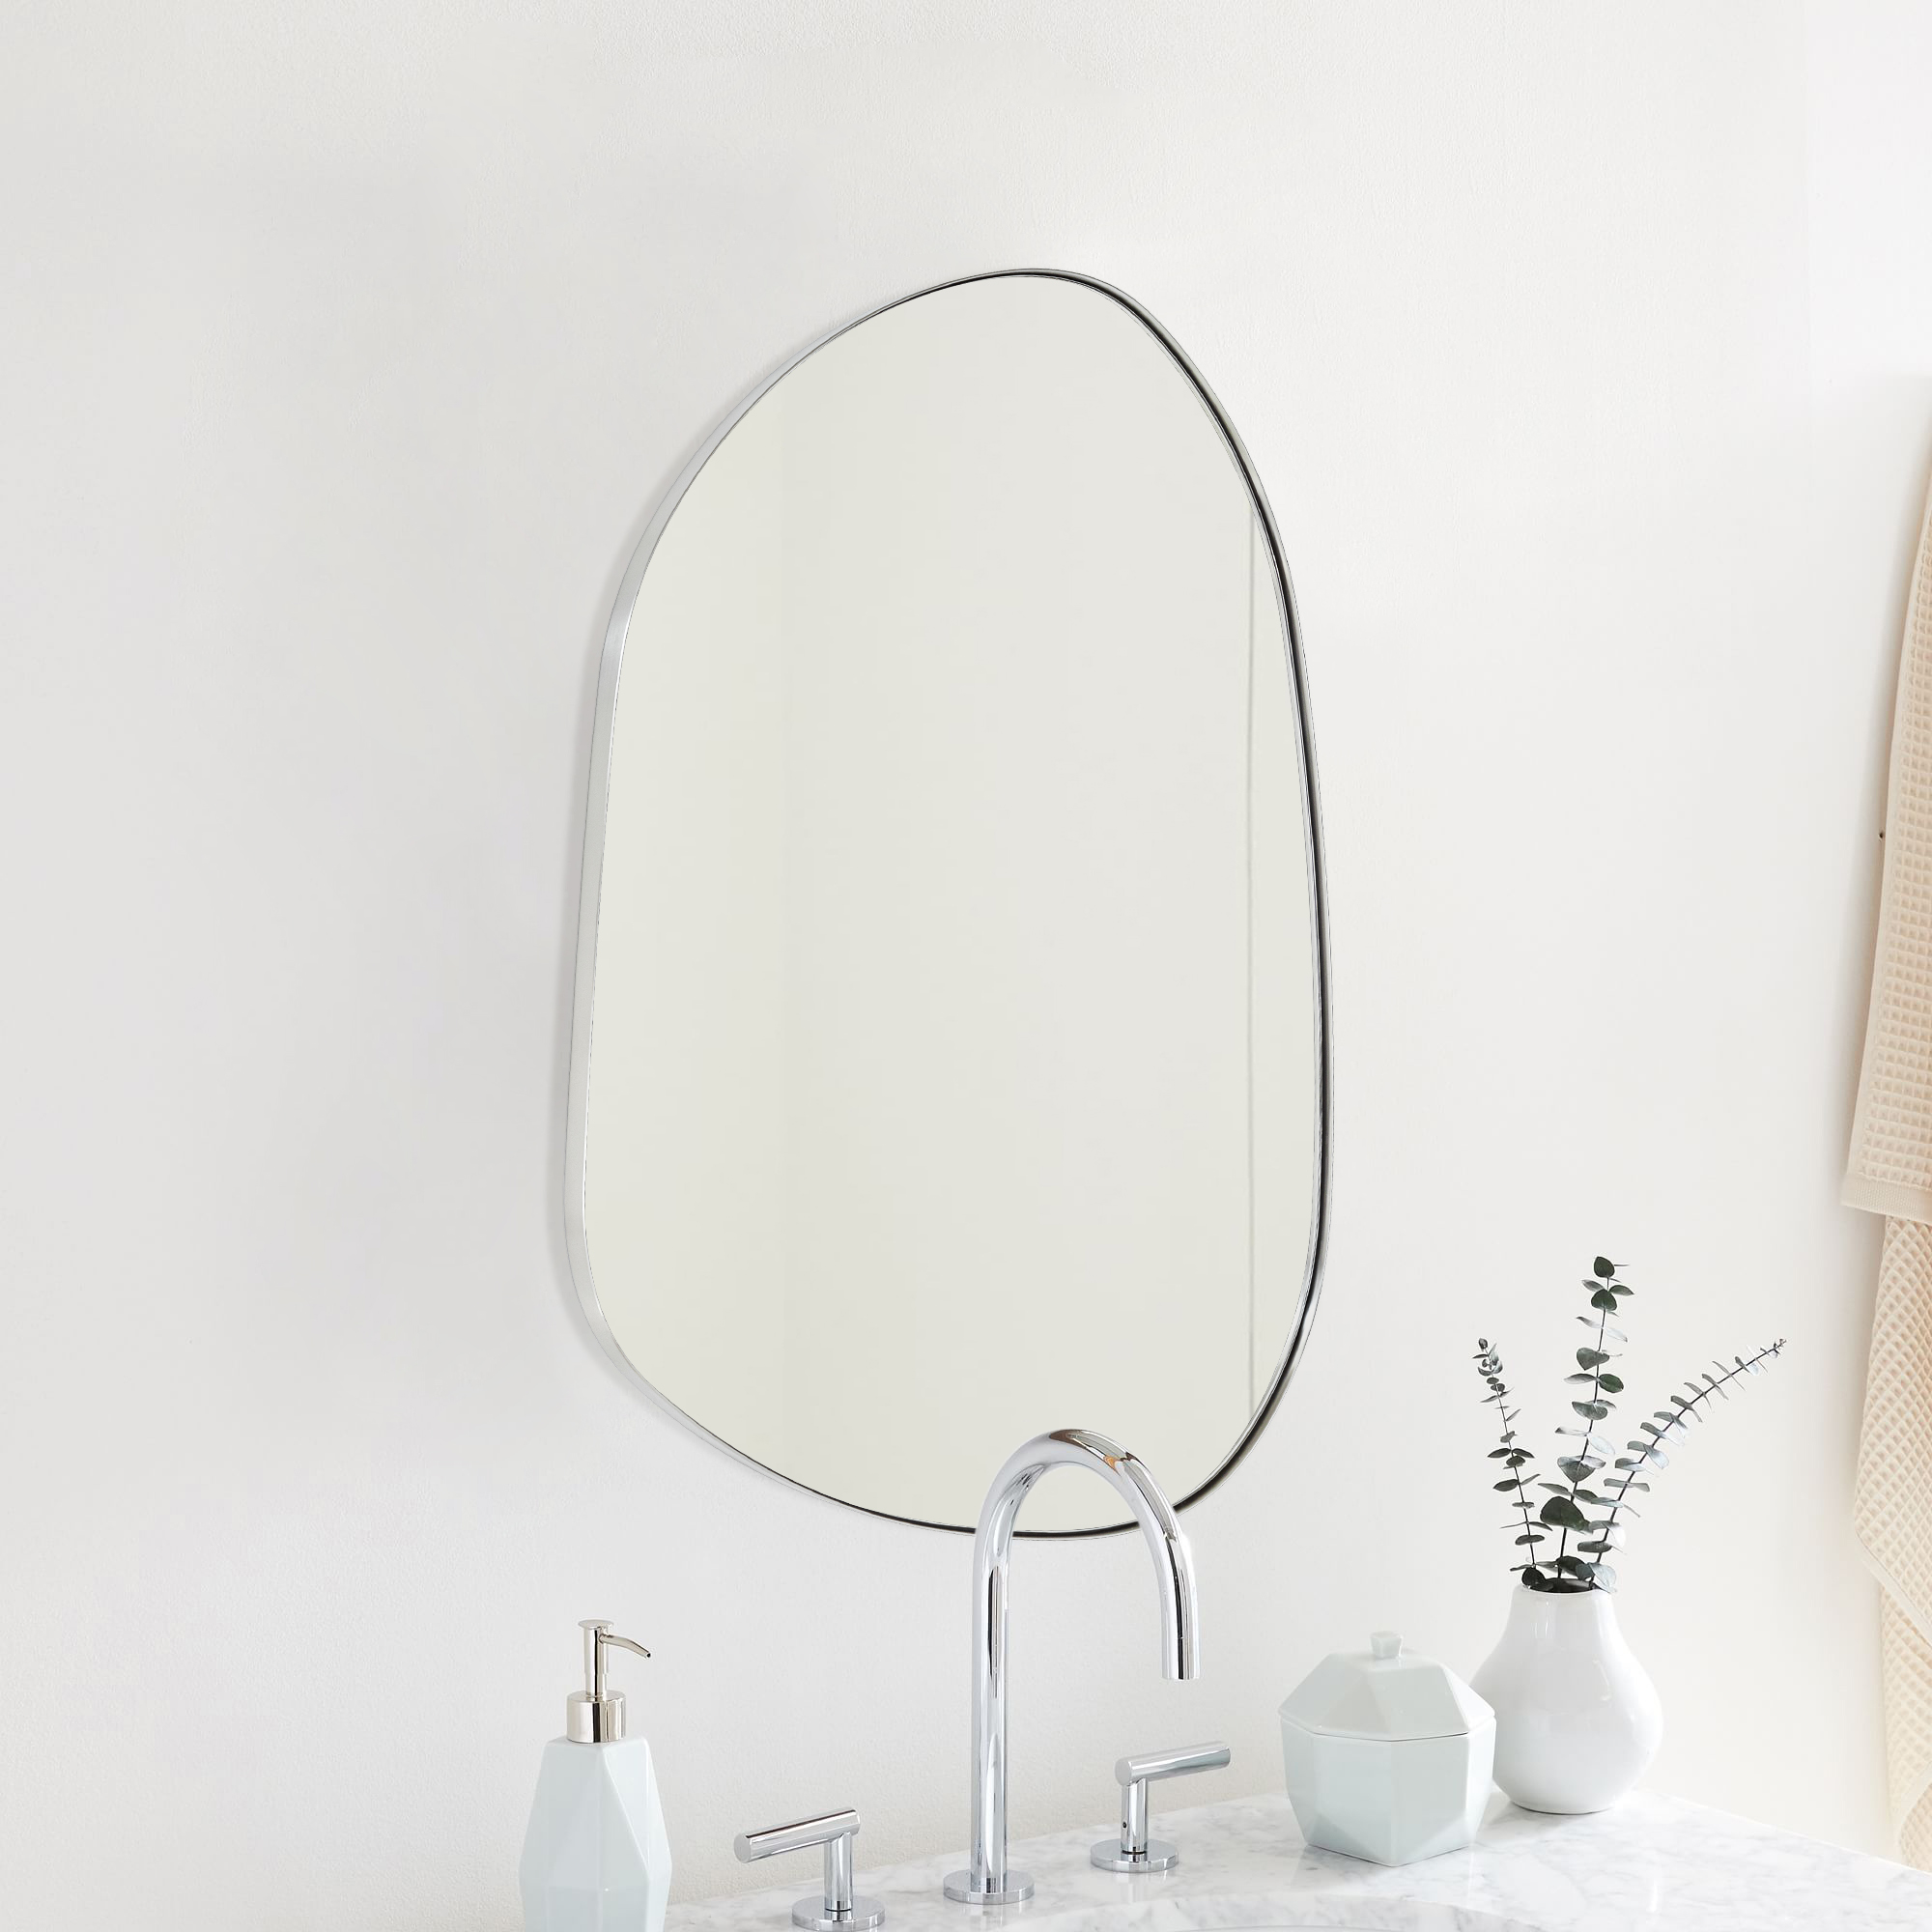 Bertlinde asymmetrical wall mirror irregular shaped mirror for living room, bathroom or entry-26x36"-Brushed Nickel